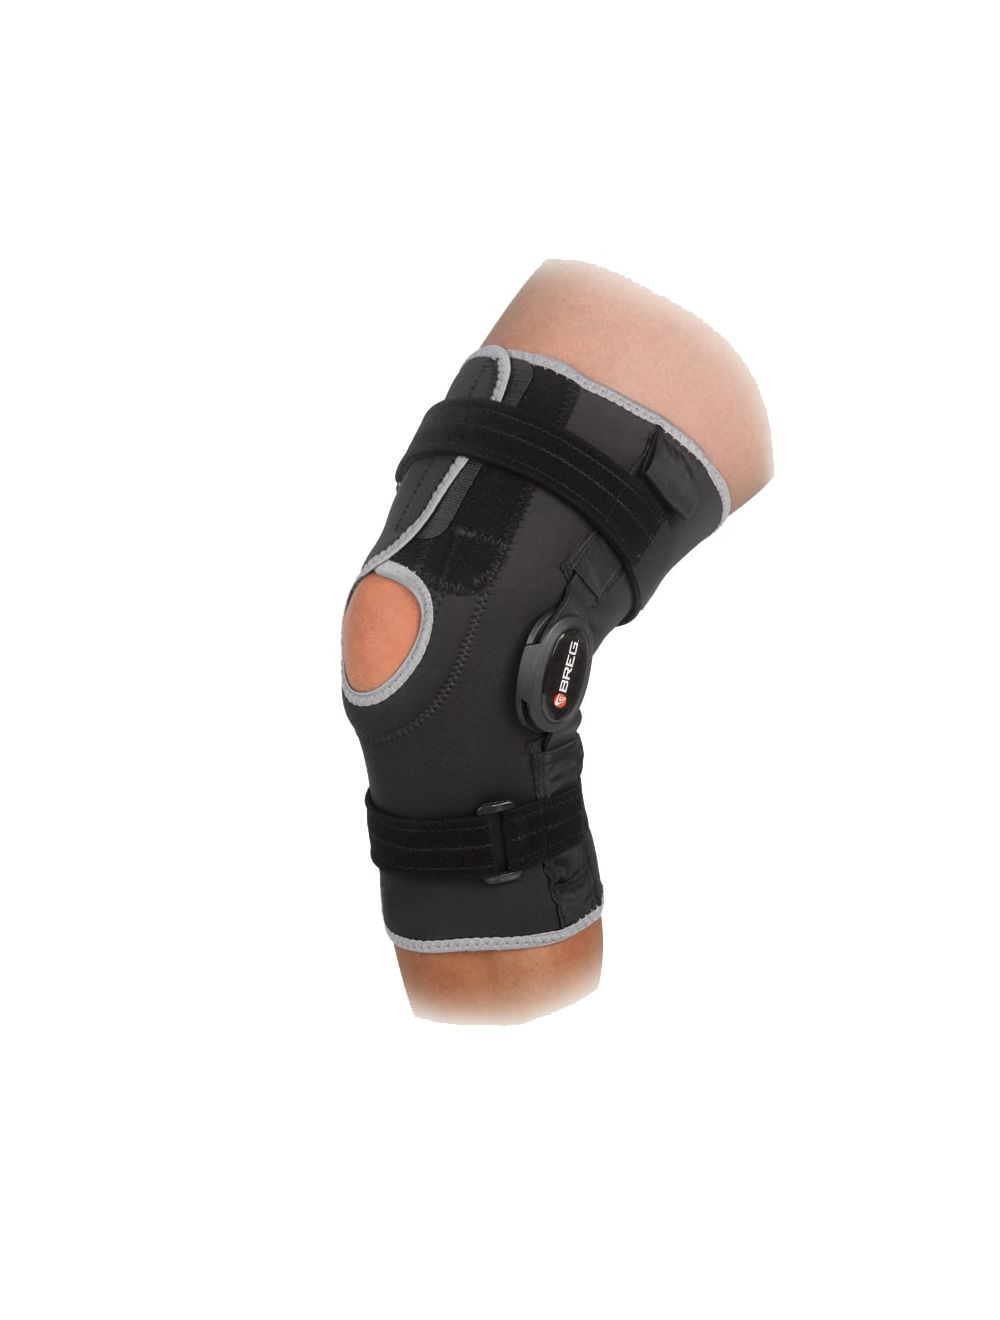 California Medical Supply Company Breg Crossover Knee Brace AAA